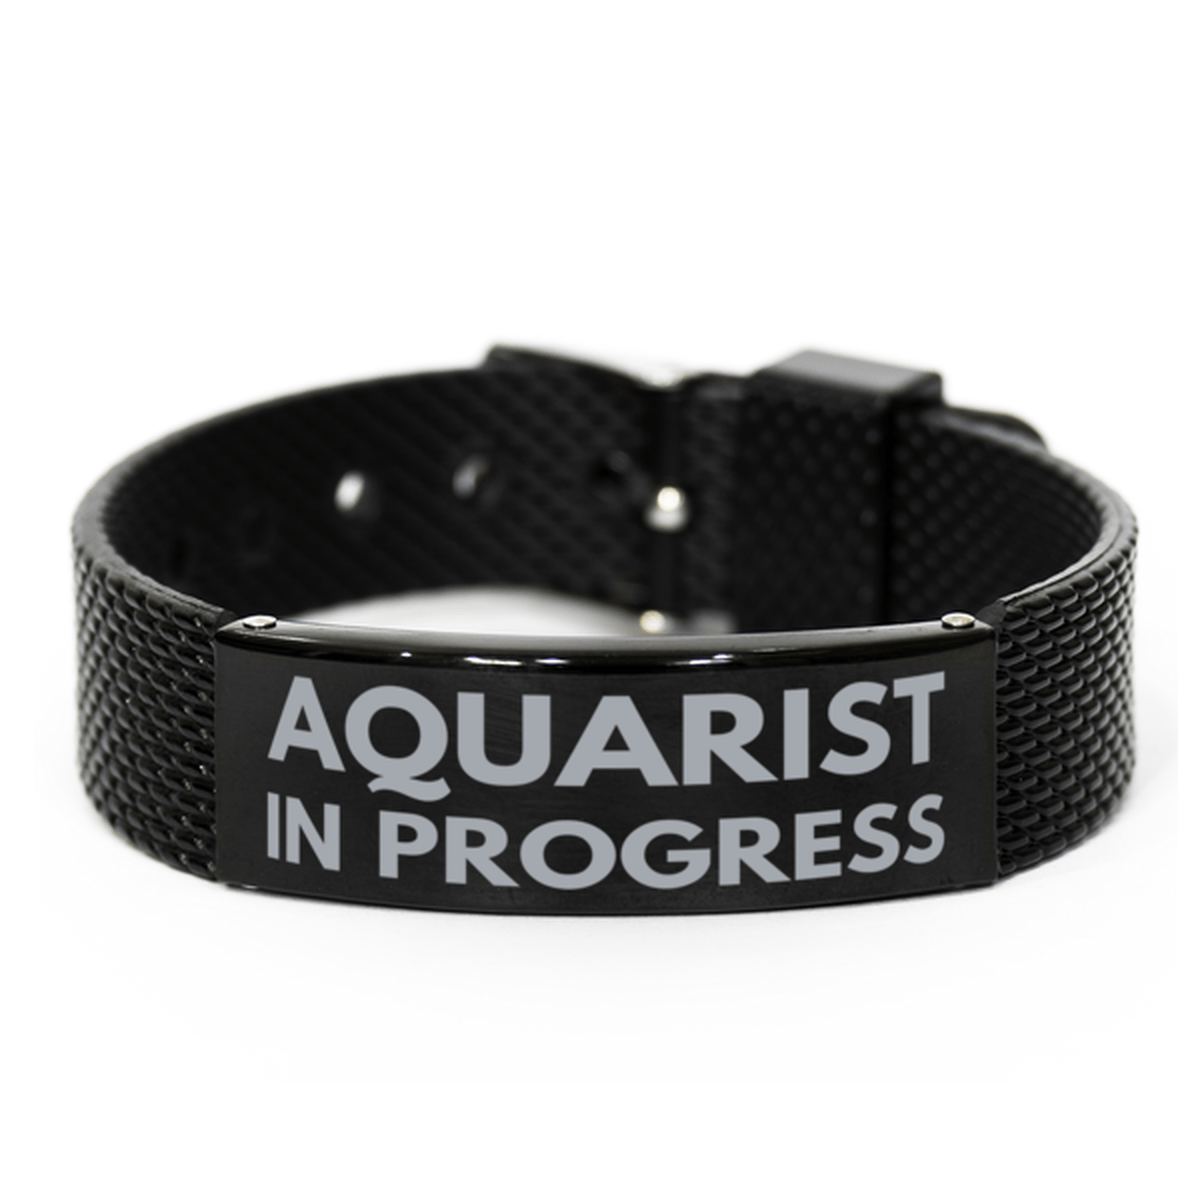 Inspirational Aquarist Black Shark Mesh Bracelet, Aquarist In Progress, Best Graduation Gifts for Students